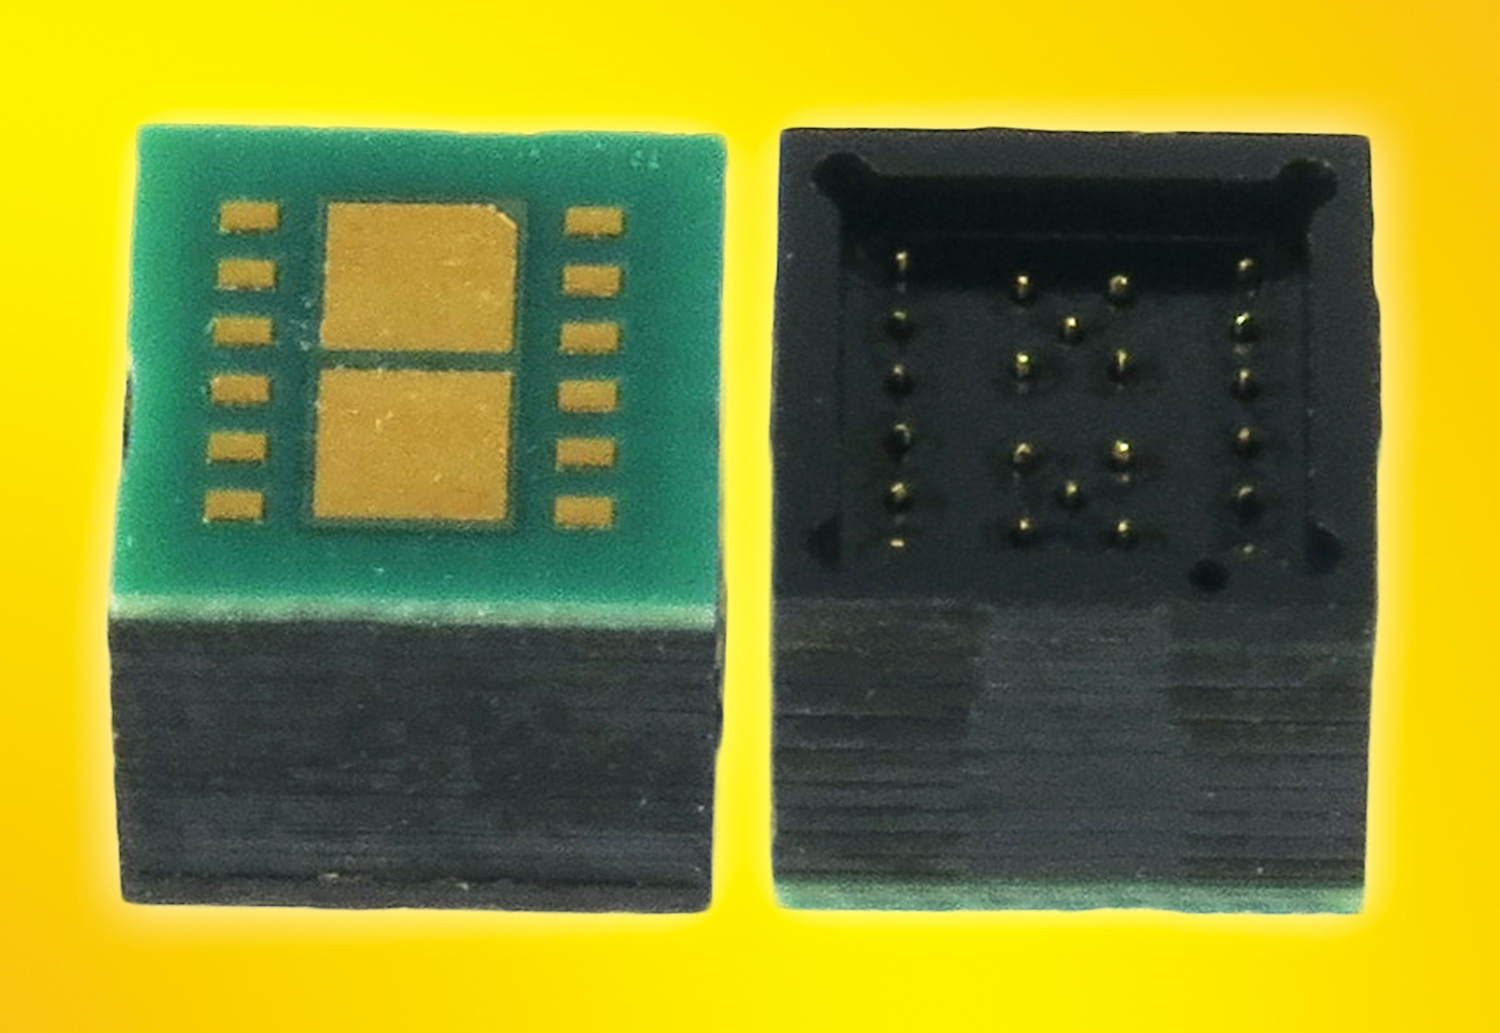 New product - Ironwood Electronics’ new near-zero-footprint SMT spring-pin sockets